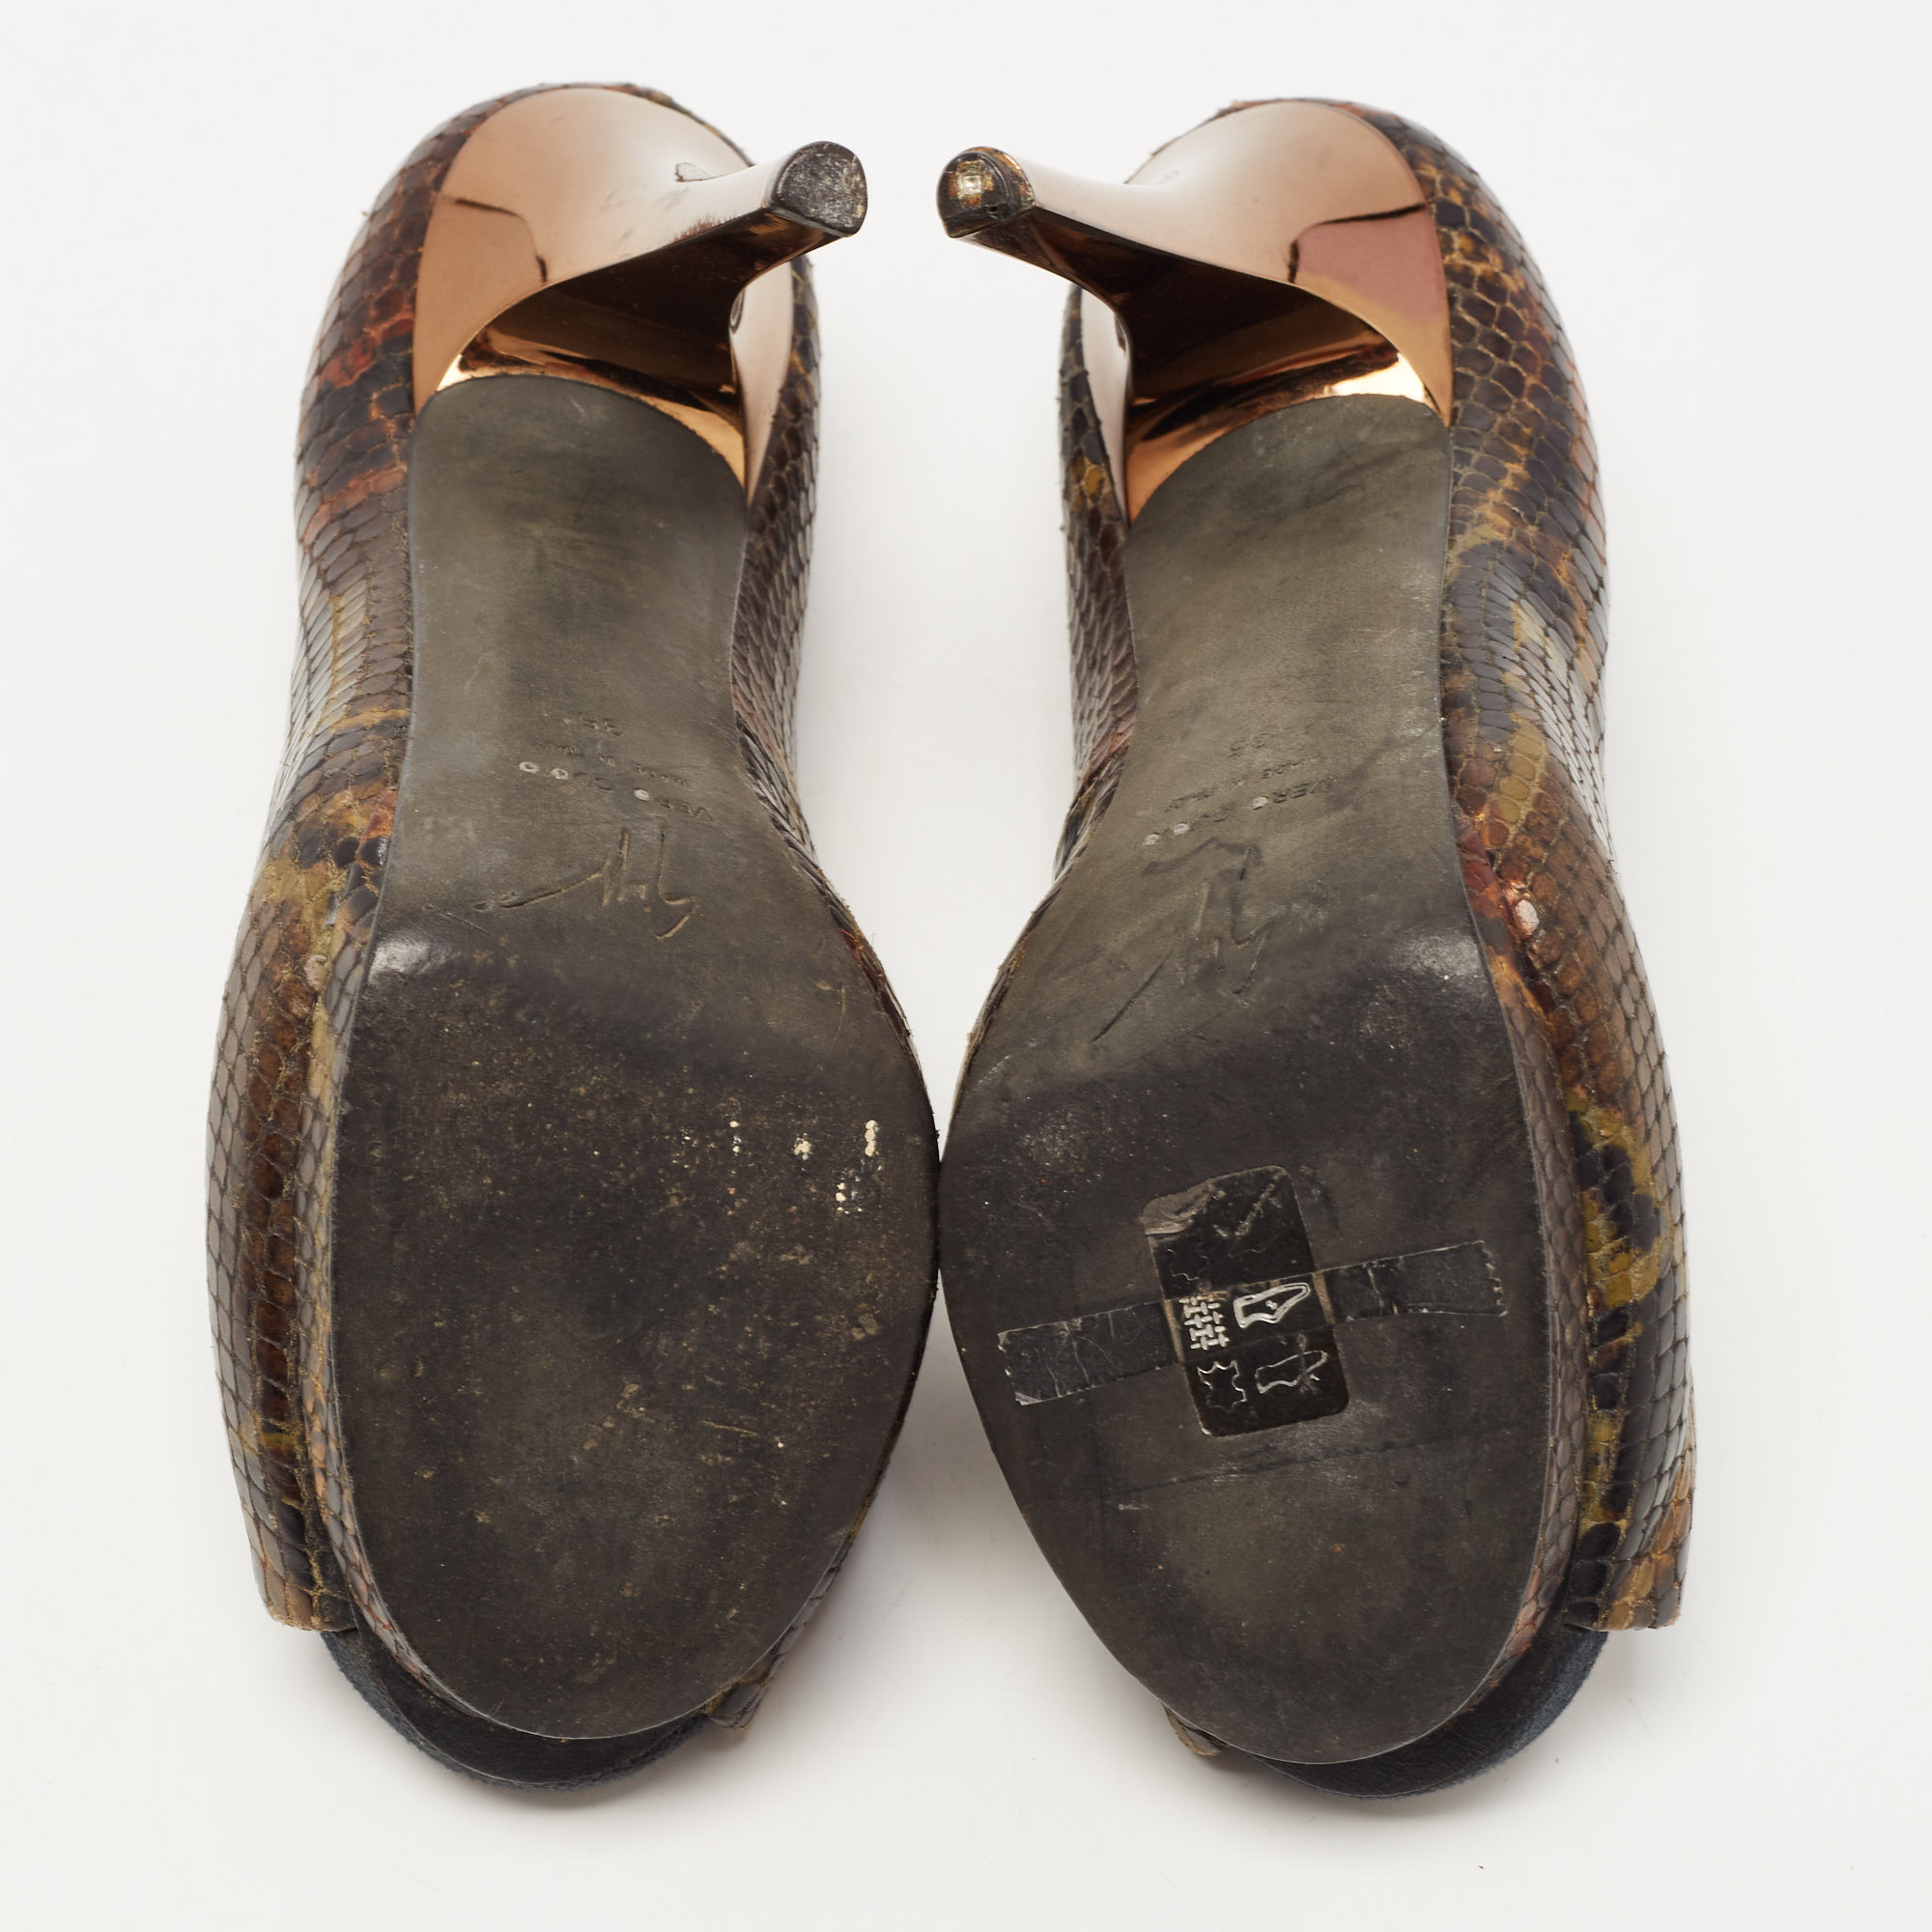 Giuseppe Zanotti Brown Python Embossed Leather Peep Toe Pumps Size 35